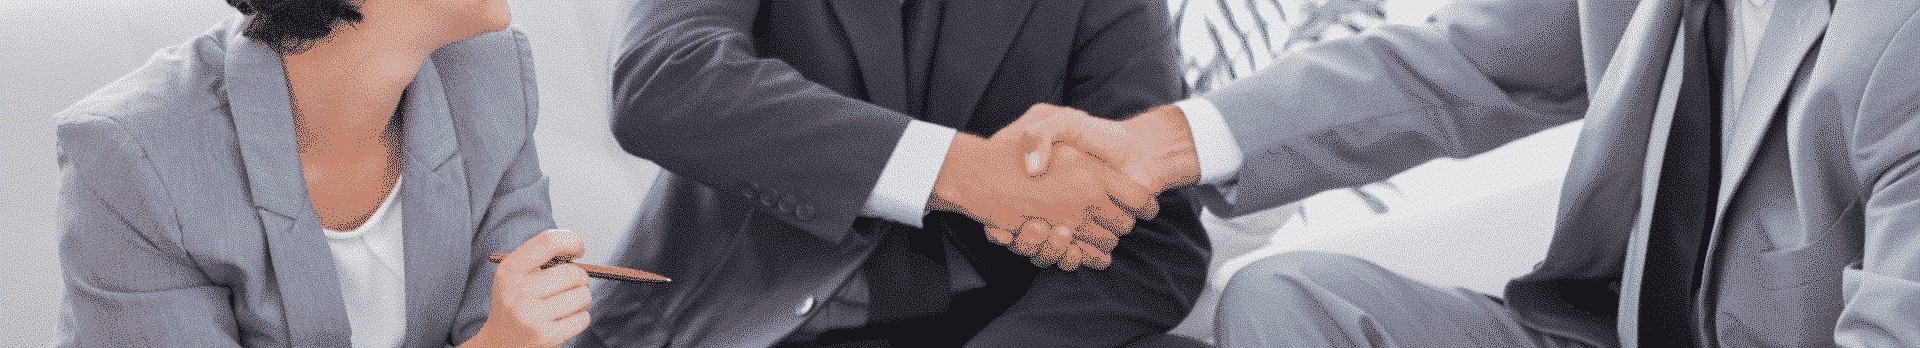 two men shaking hands B2B eCommerce